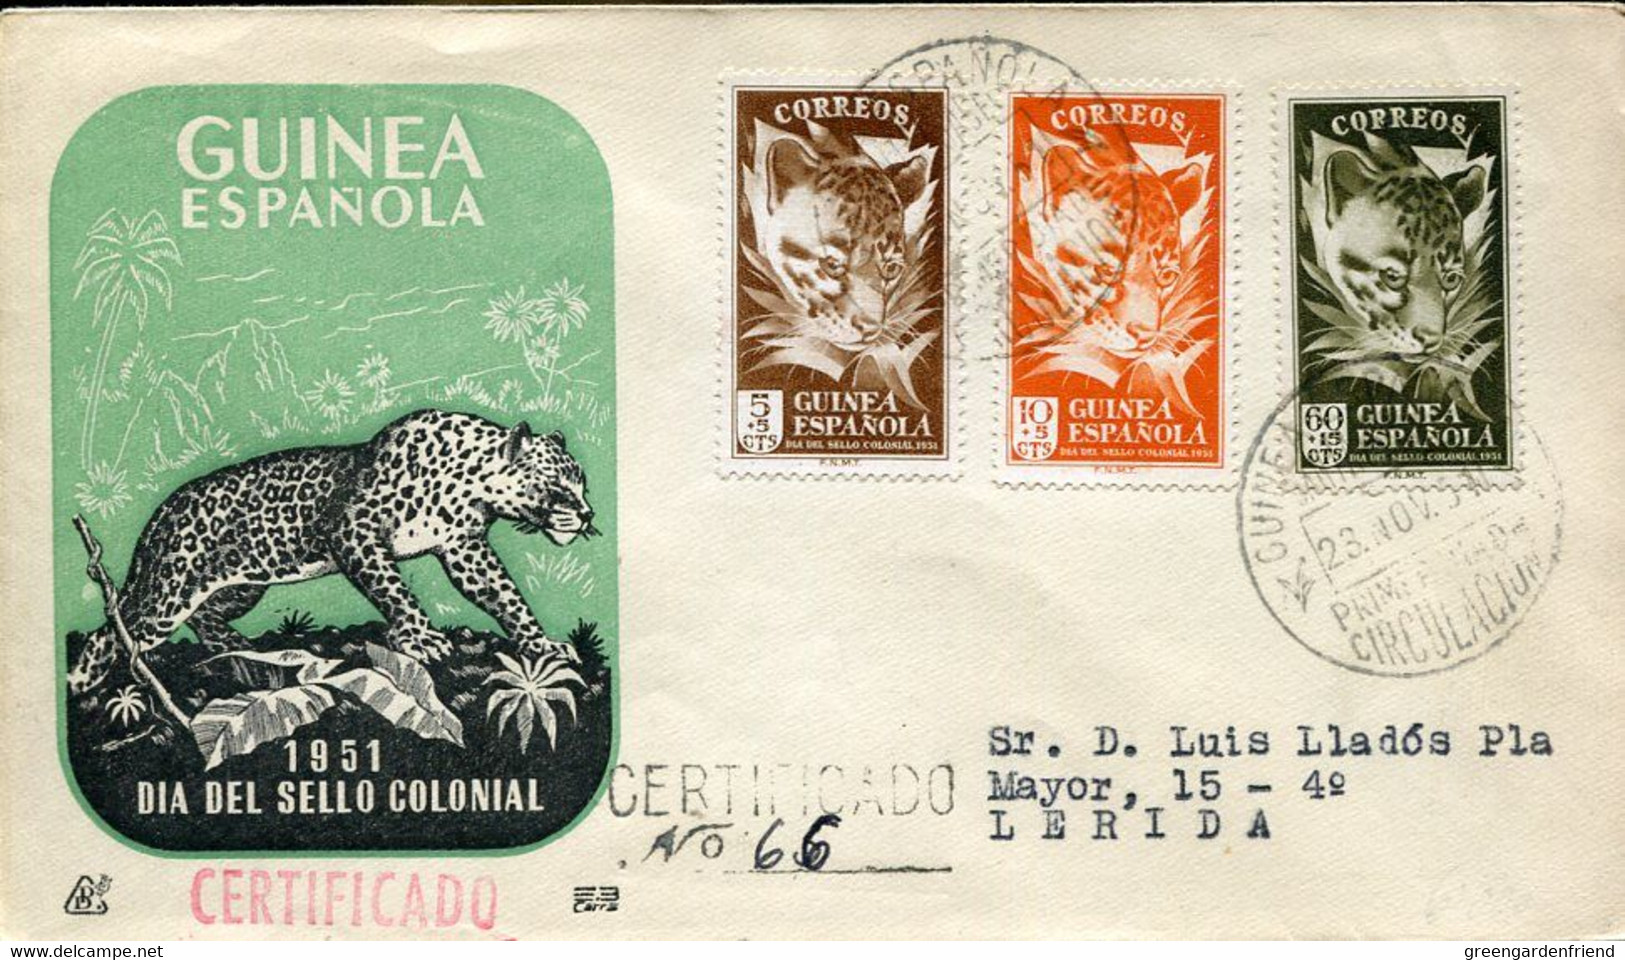 66494 Guinea Espanola, Fdc Circuled Registered 23.11.1951  Dia Del Sello Colonial - Guinea Spagnola